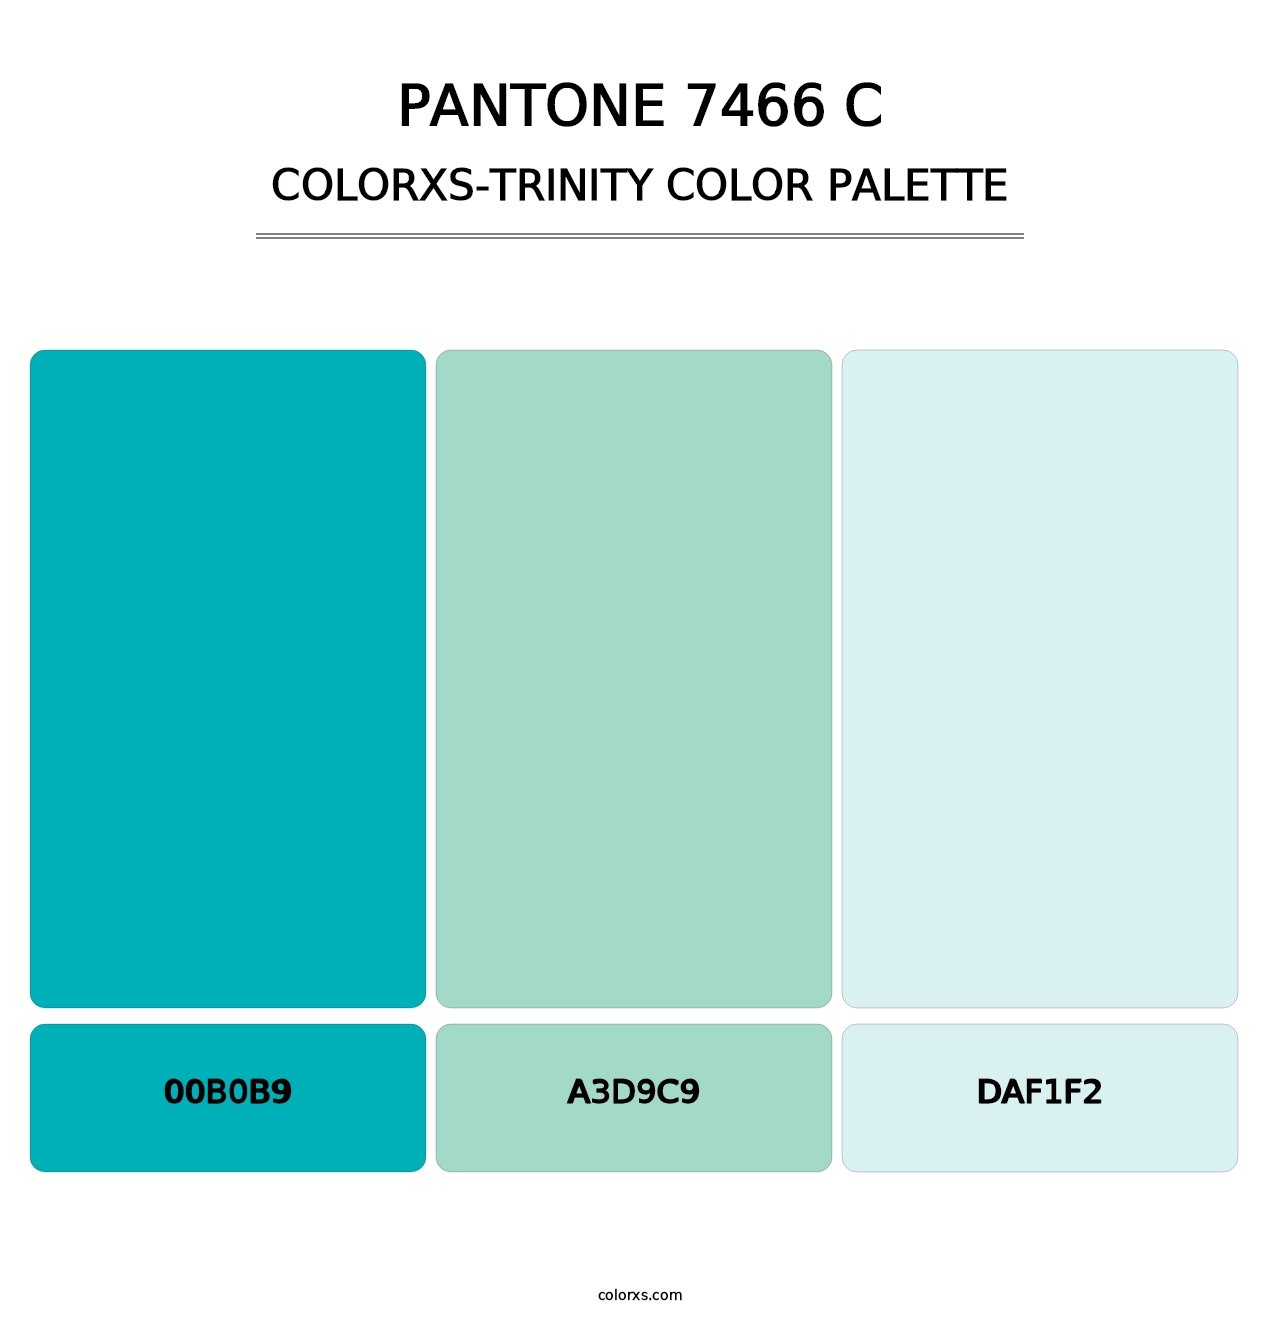 PANTONE 7466 C - Colorxs Trinity Palette